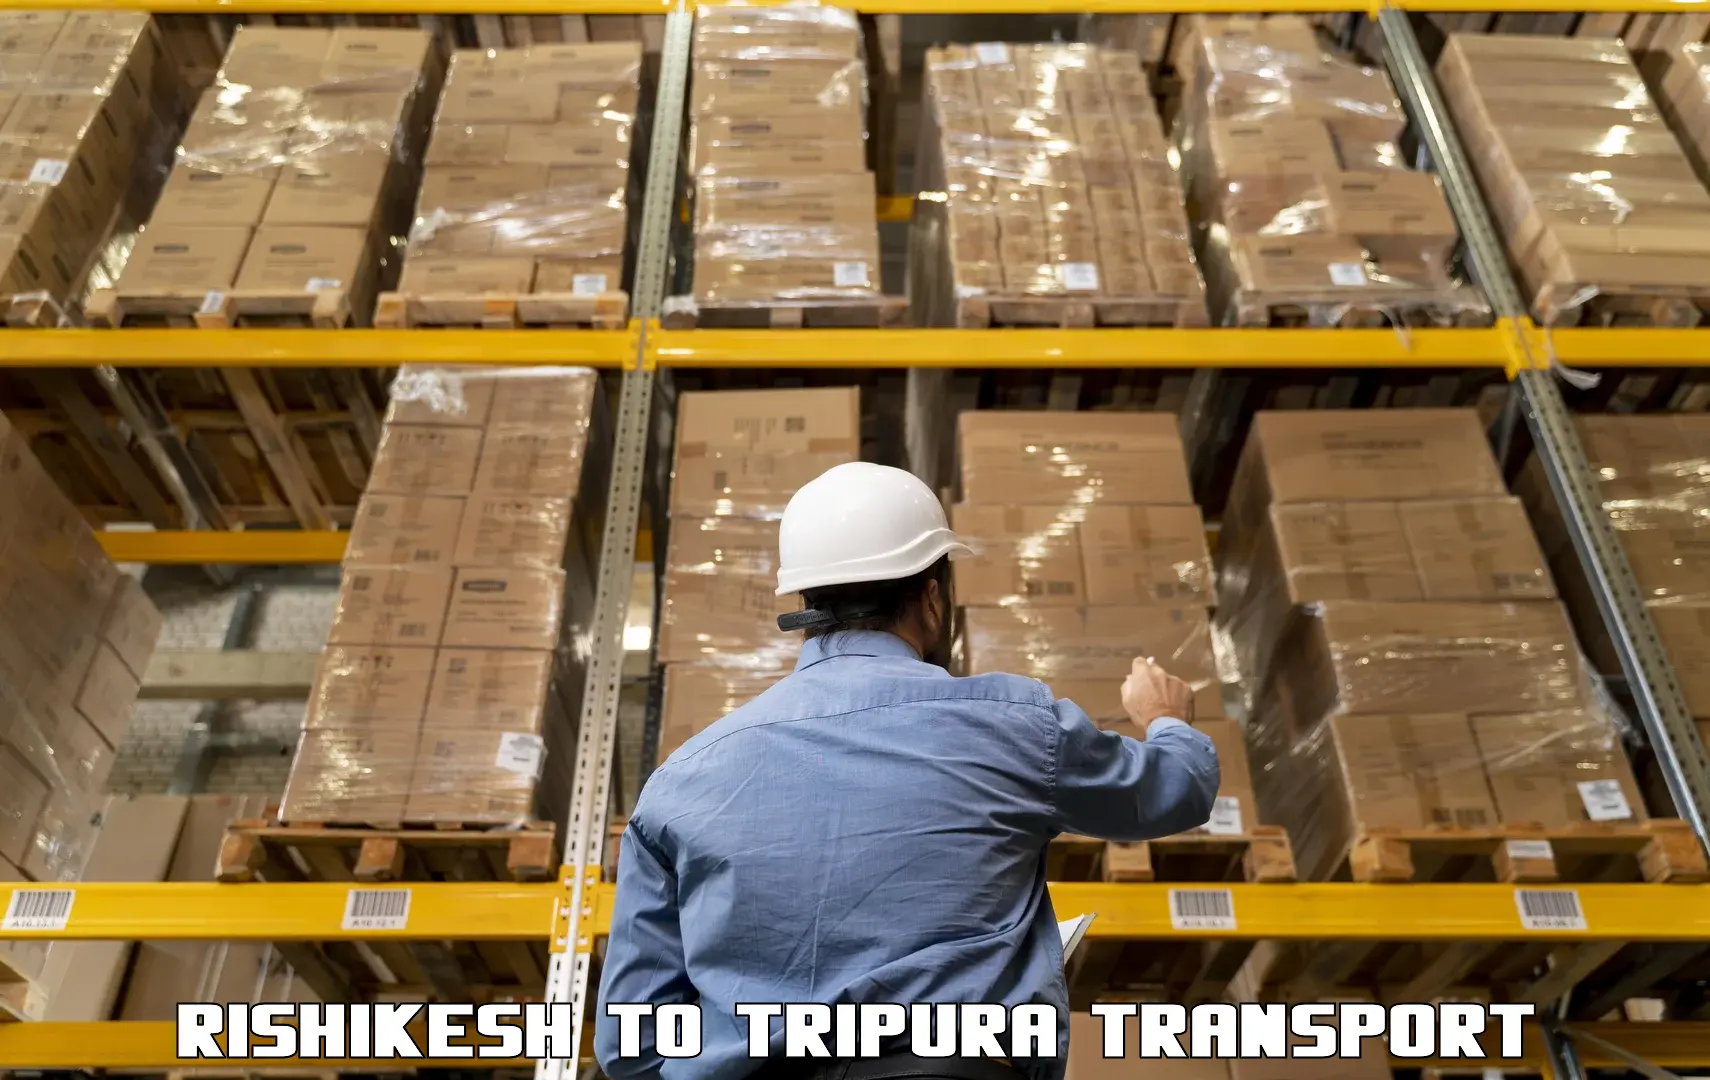 Daily transport service Rishikesh to Udaipur Tripura